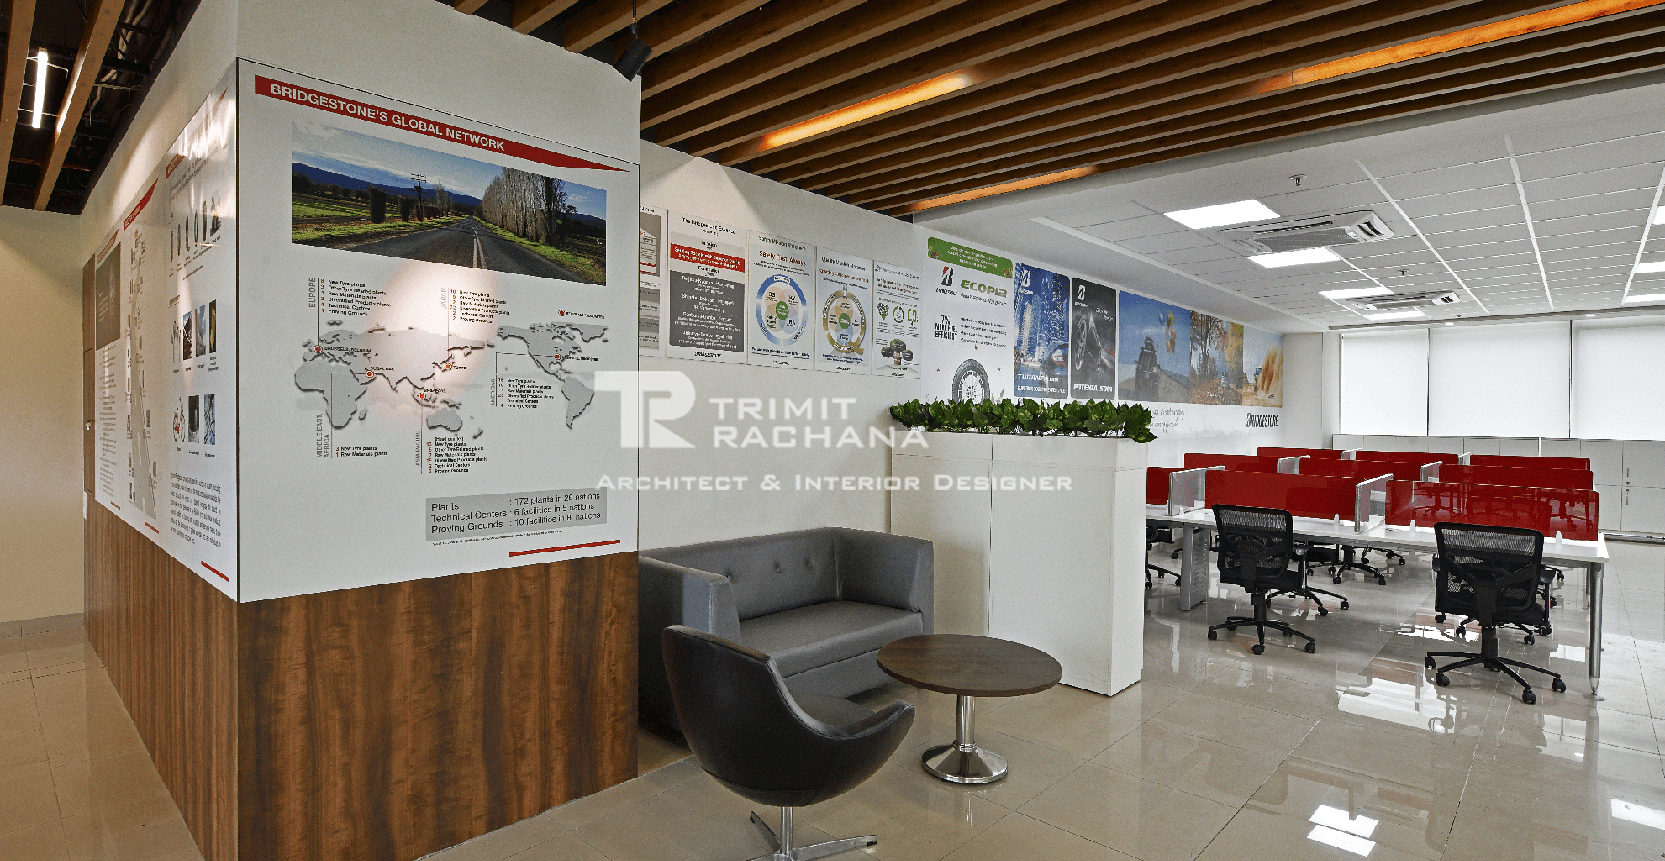 Bridgestone's corporate office workplace designed by Trimit Rachana